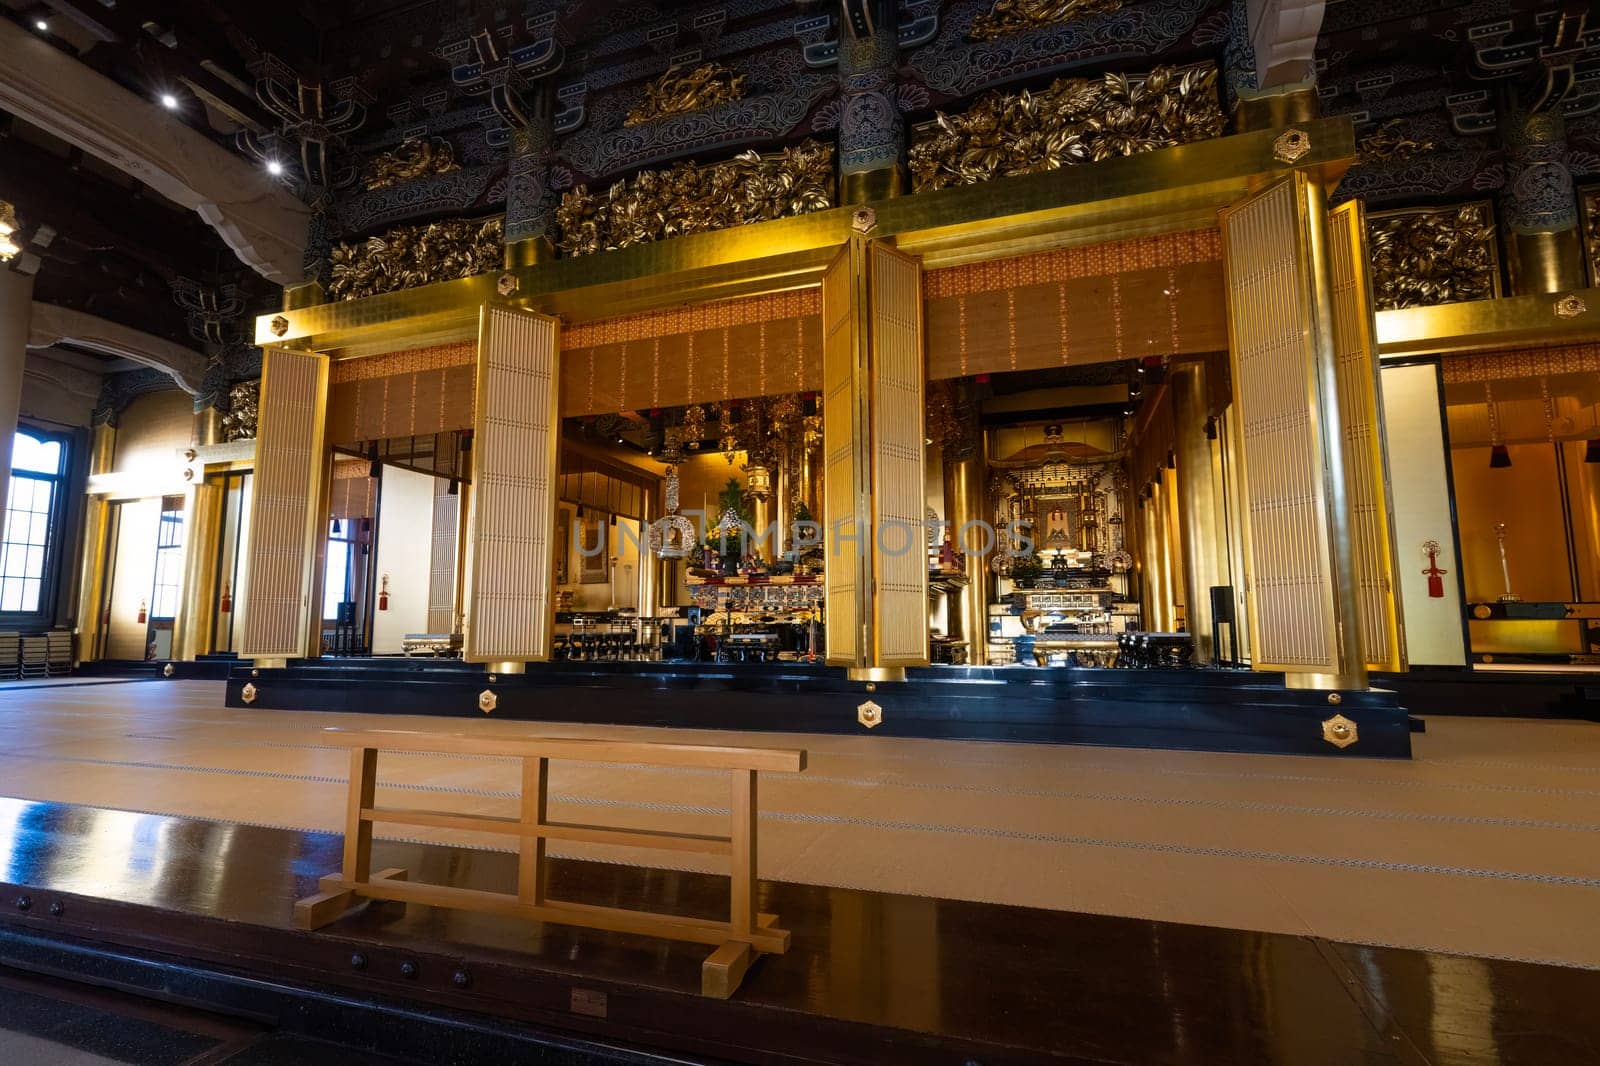  Tsukiji Hongan-ji Buddhist temple in Tokyo, Japan by sergiodv